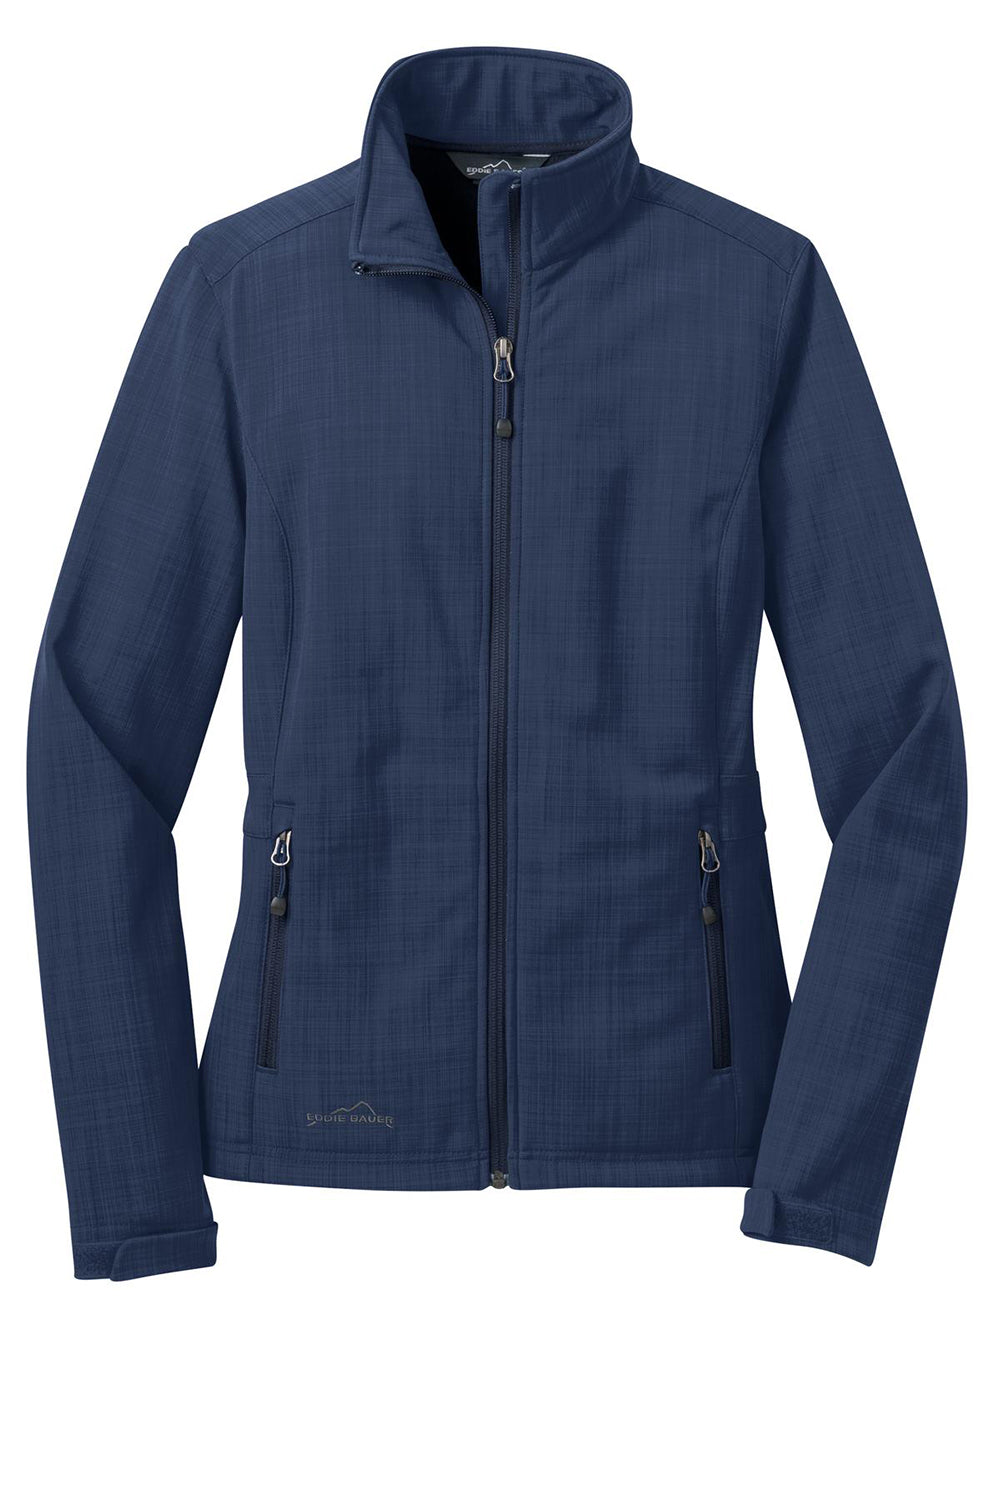 Eddie Bauer EB533 Womens Shaded Crosshatch Wind & Water Resistant Full Zip Jacket Blue Flat Front